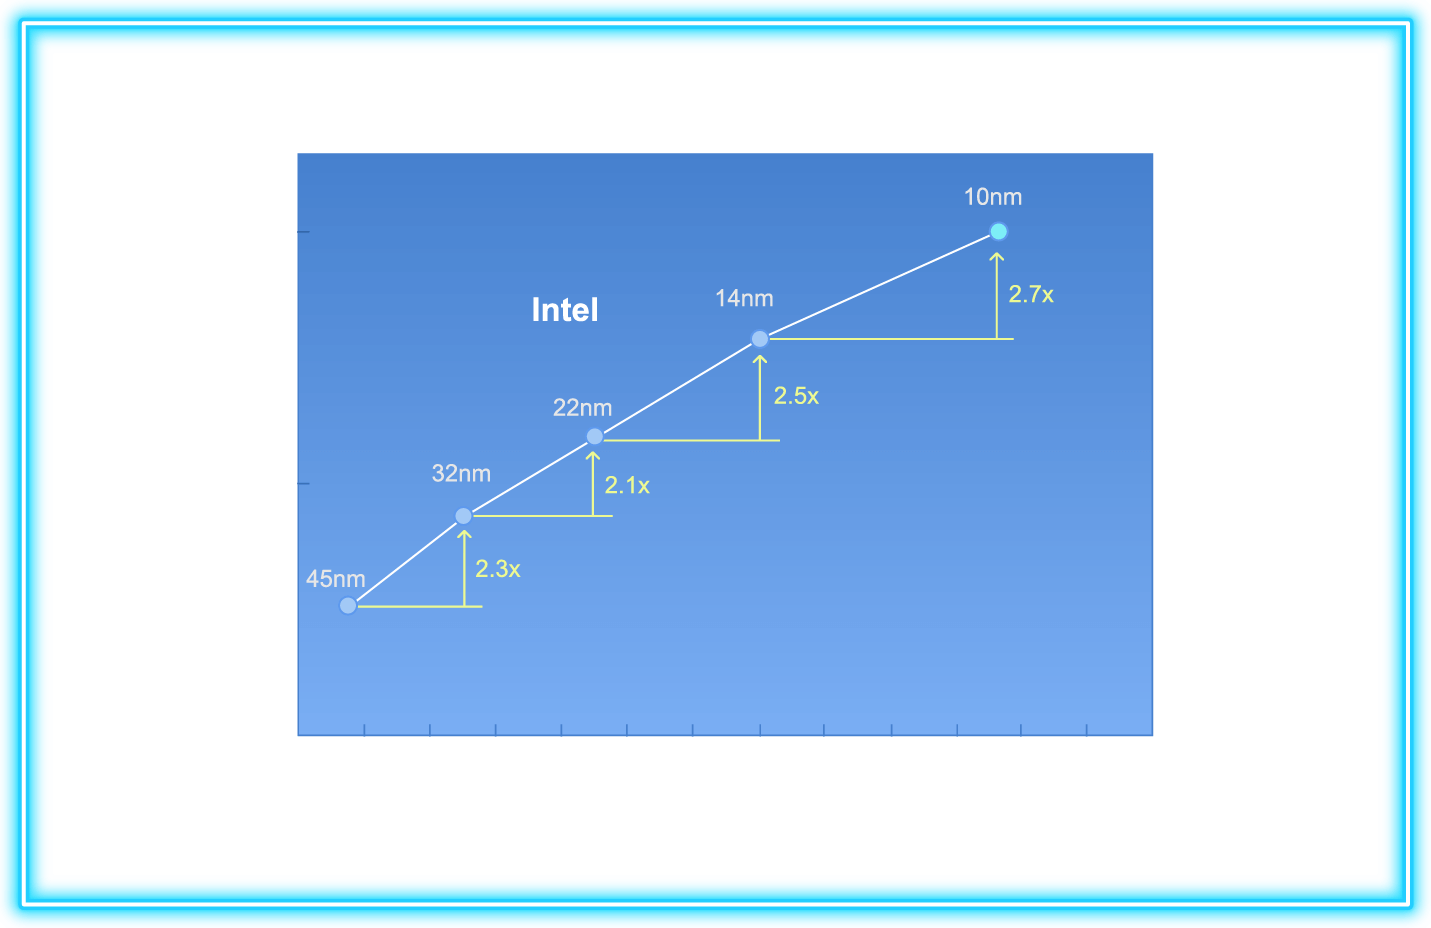 Logic transistor density